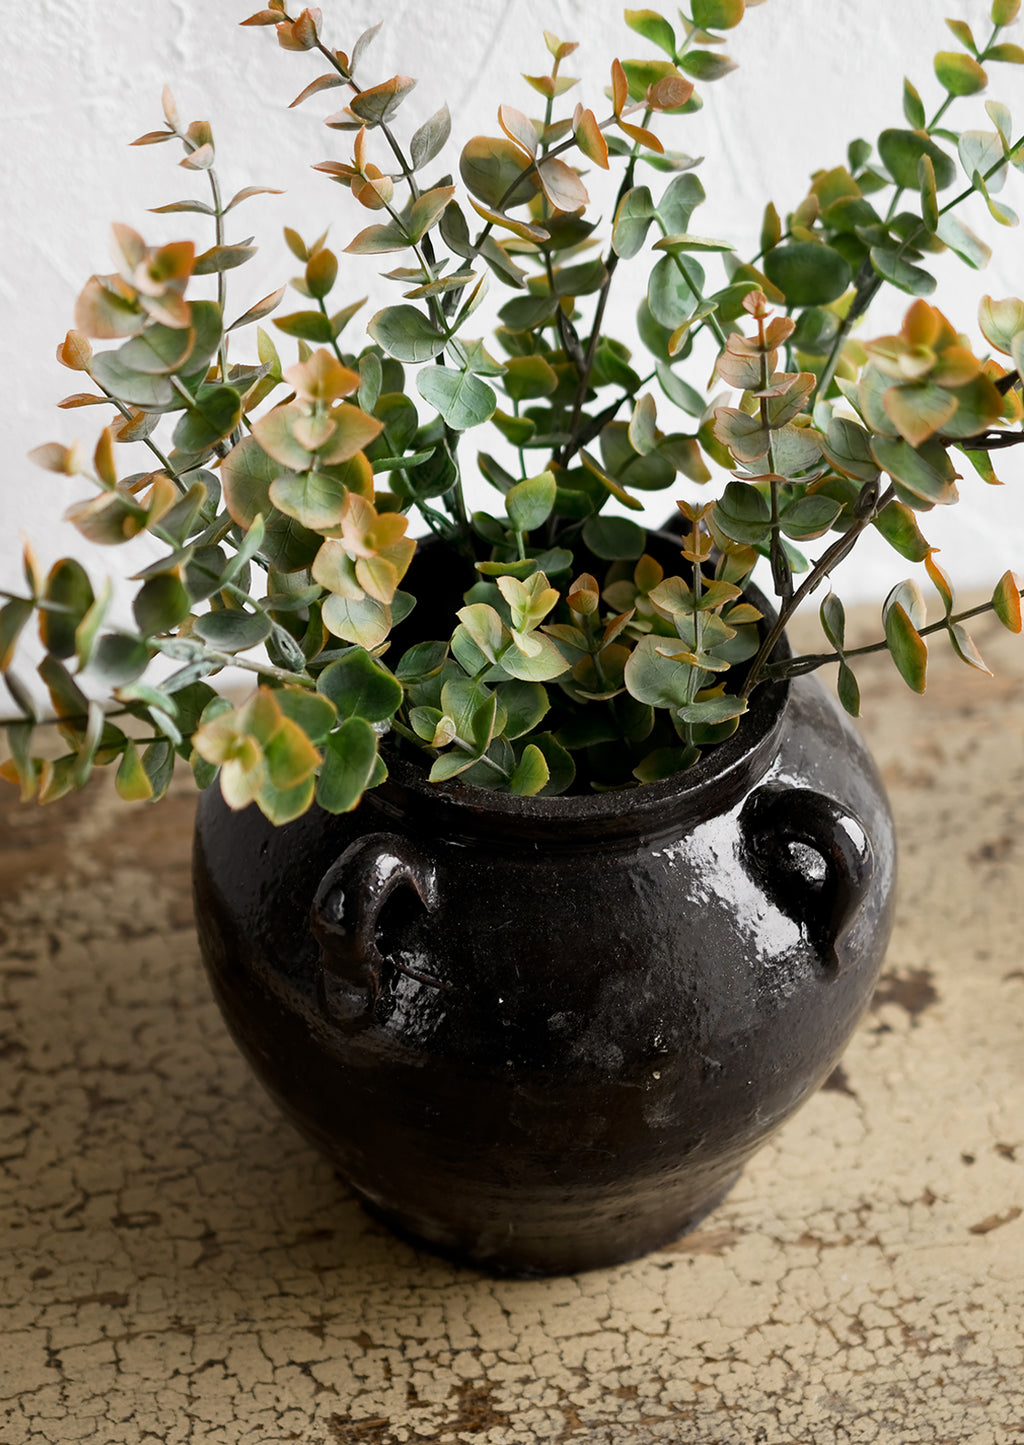 3: A dark brown ceramic jar with decorative loop handles, holding eucalyptus.